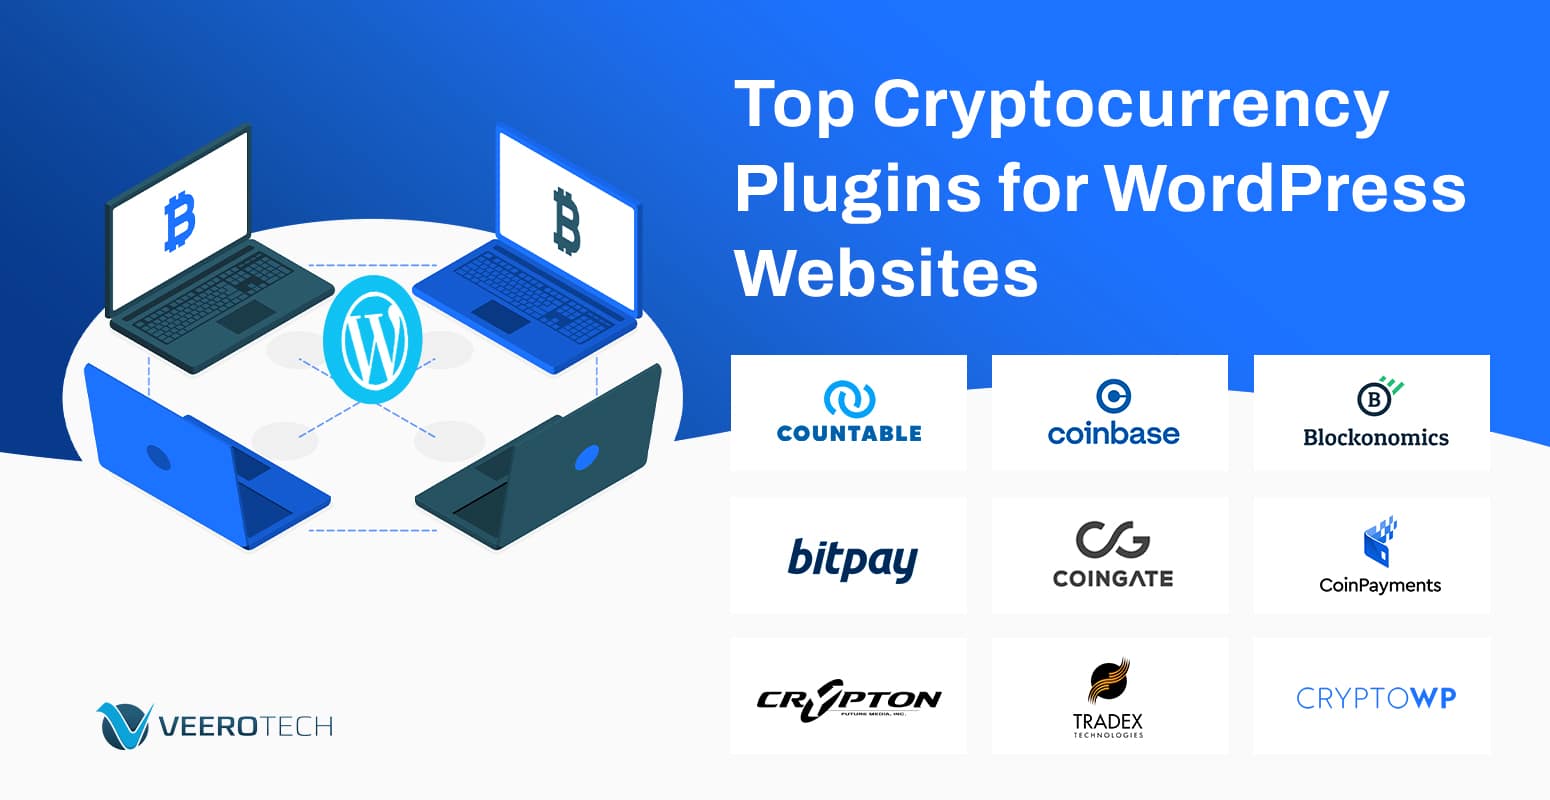 Top Cryptocurrency Plugins for WordPress Websites